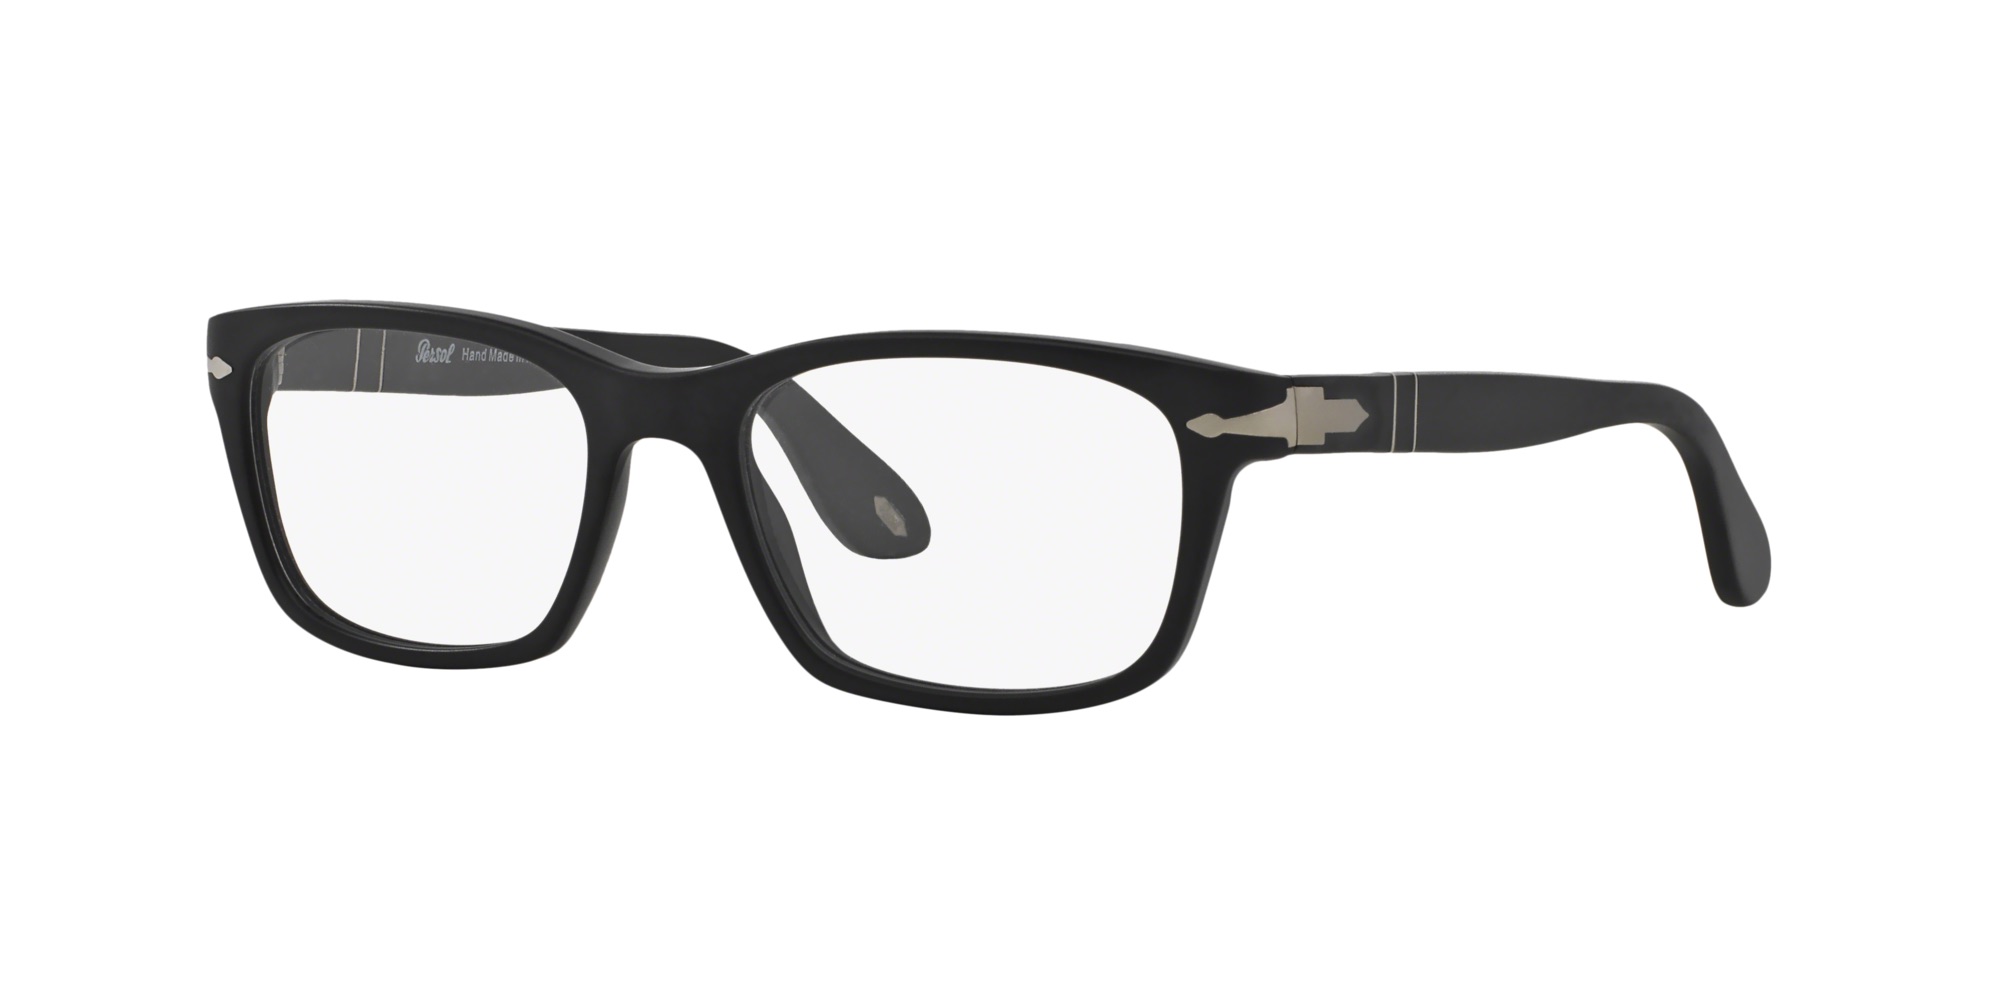 Persol Men's Eyeglasses - Matte Black